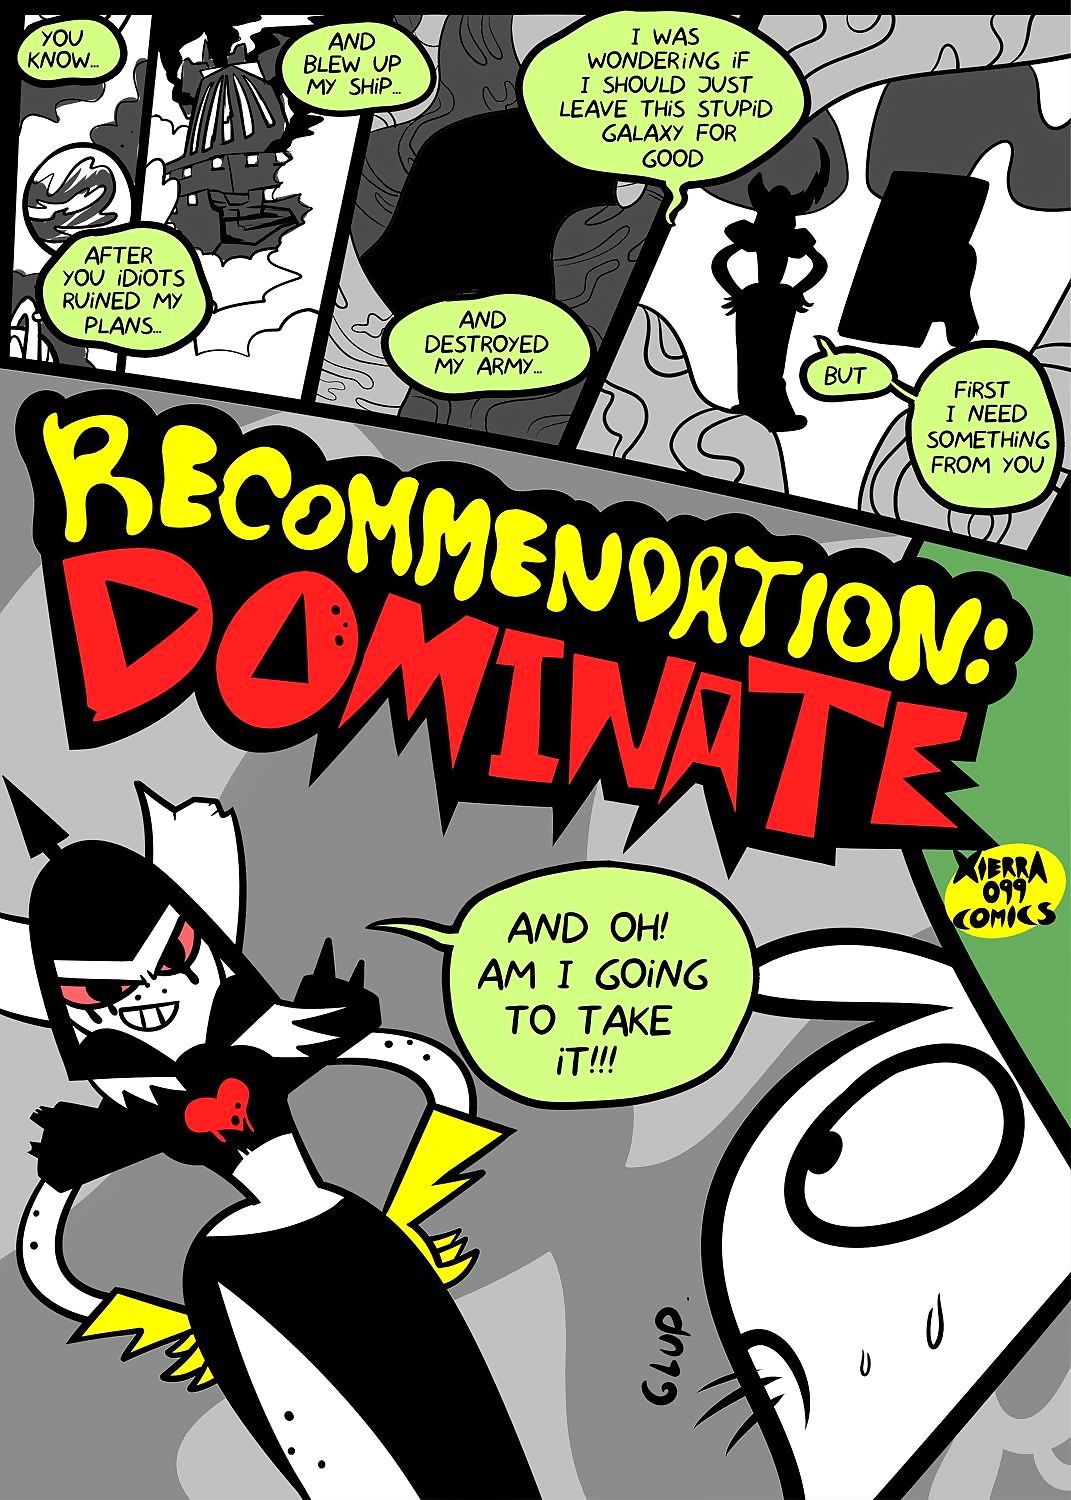 recommendation: Dominować